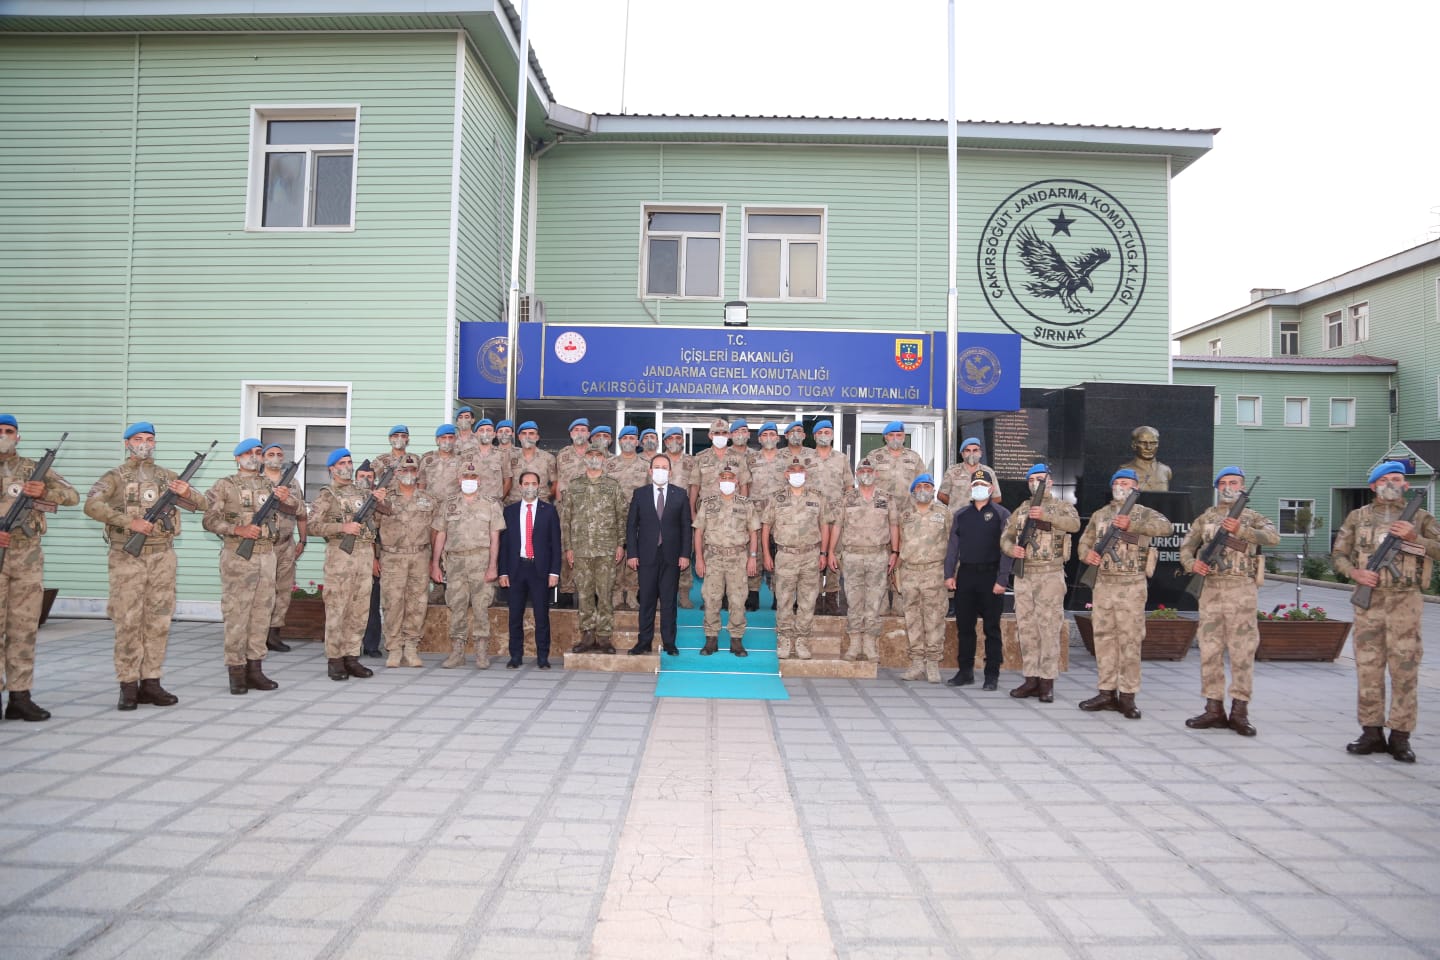 Jandarma Genel Komutanından Çakırsöğüt Jandarma Komando Tugay Komutanlığına Ziyaret